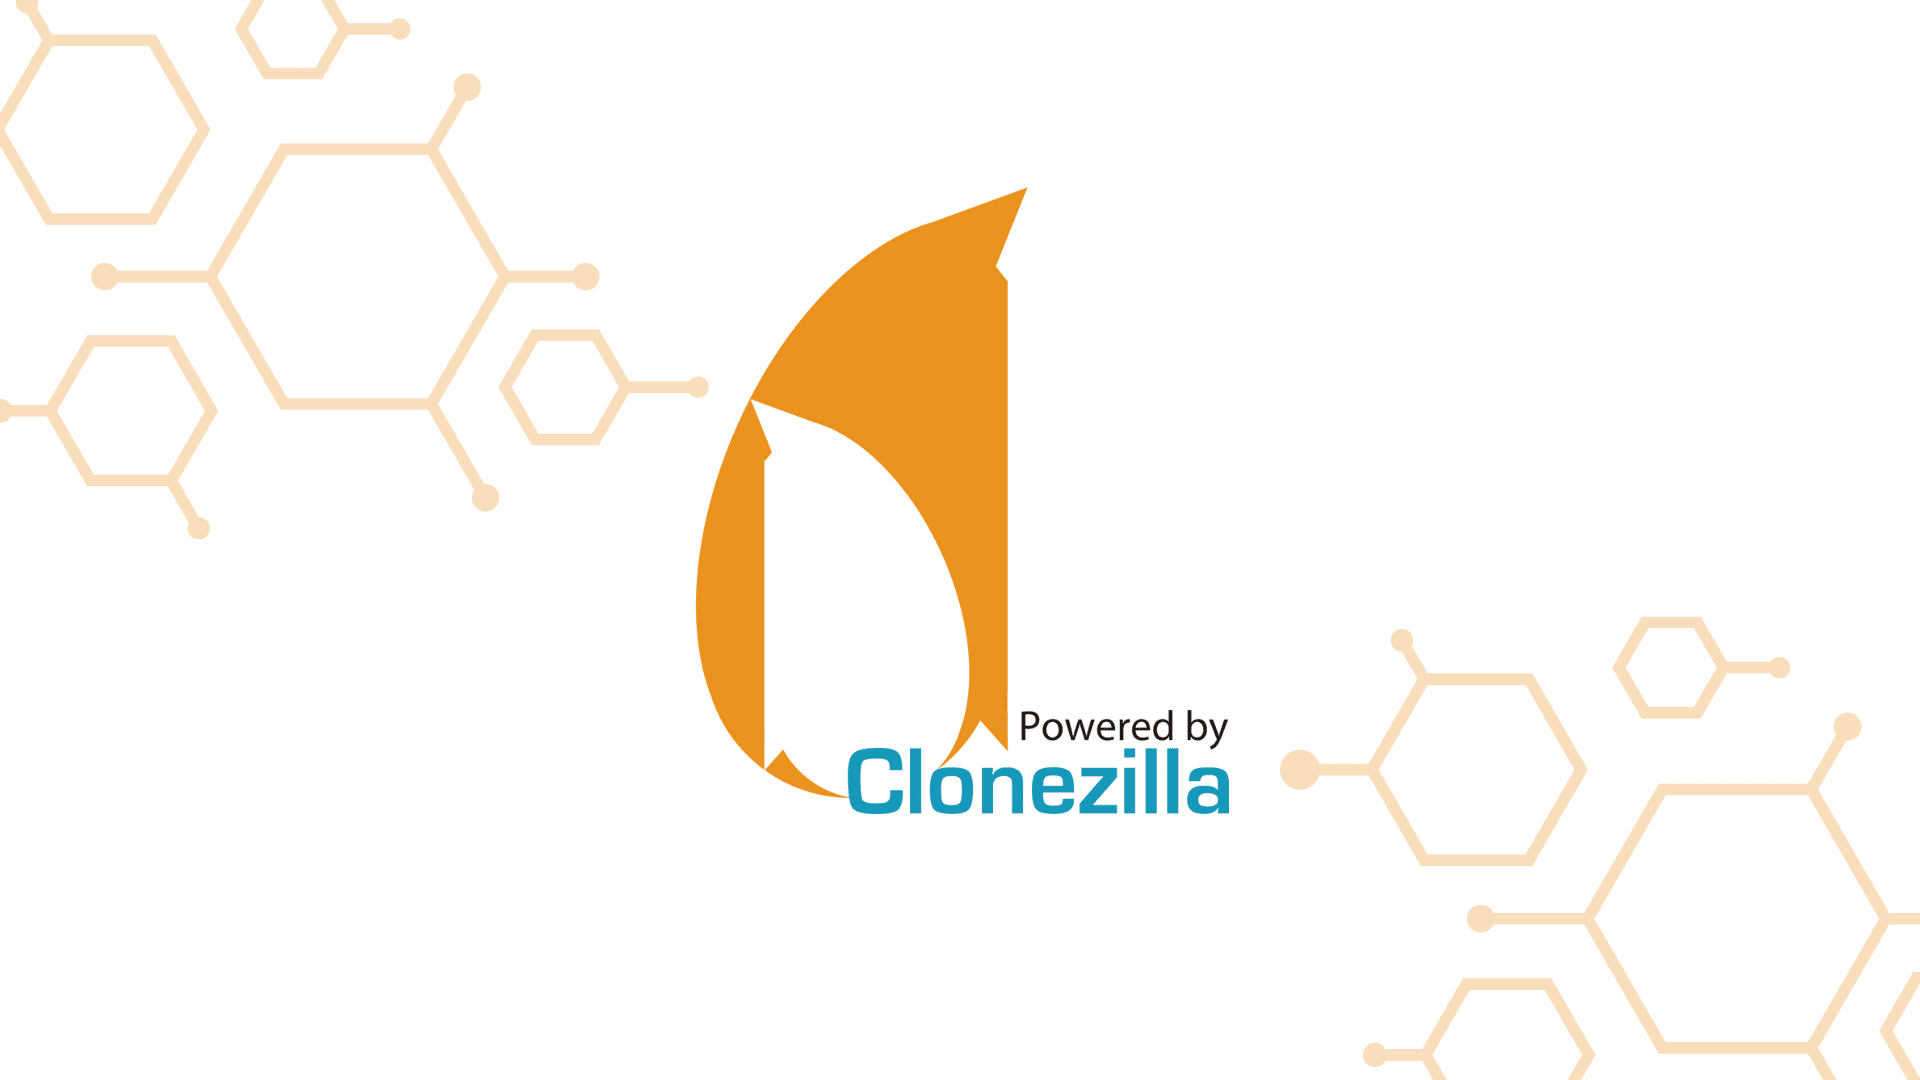 Clonezilla Logo